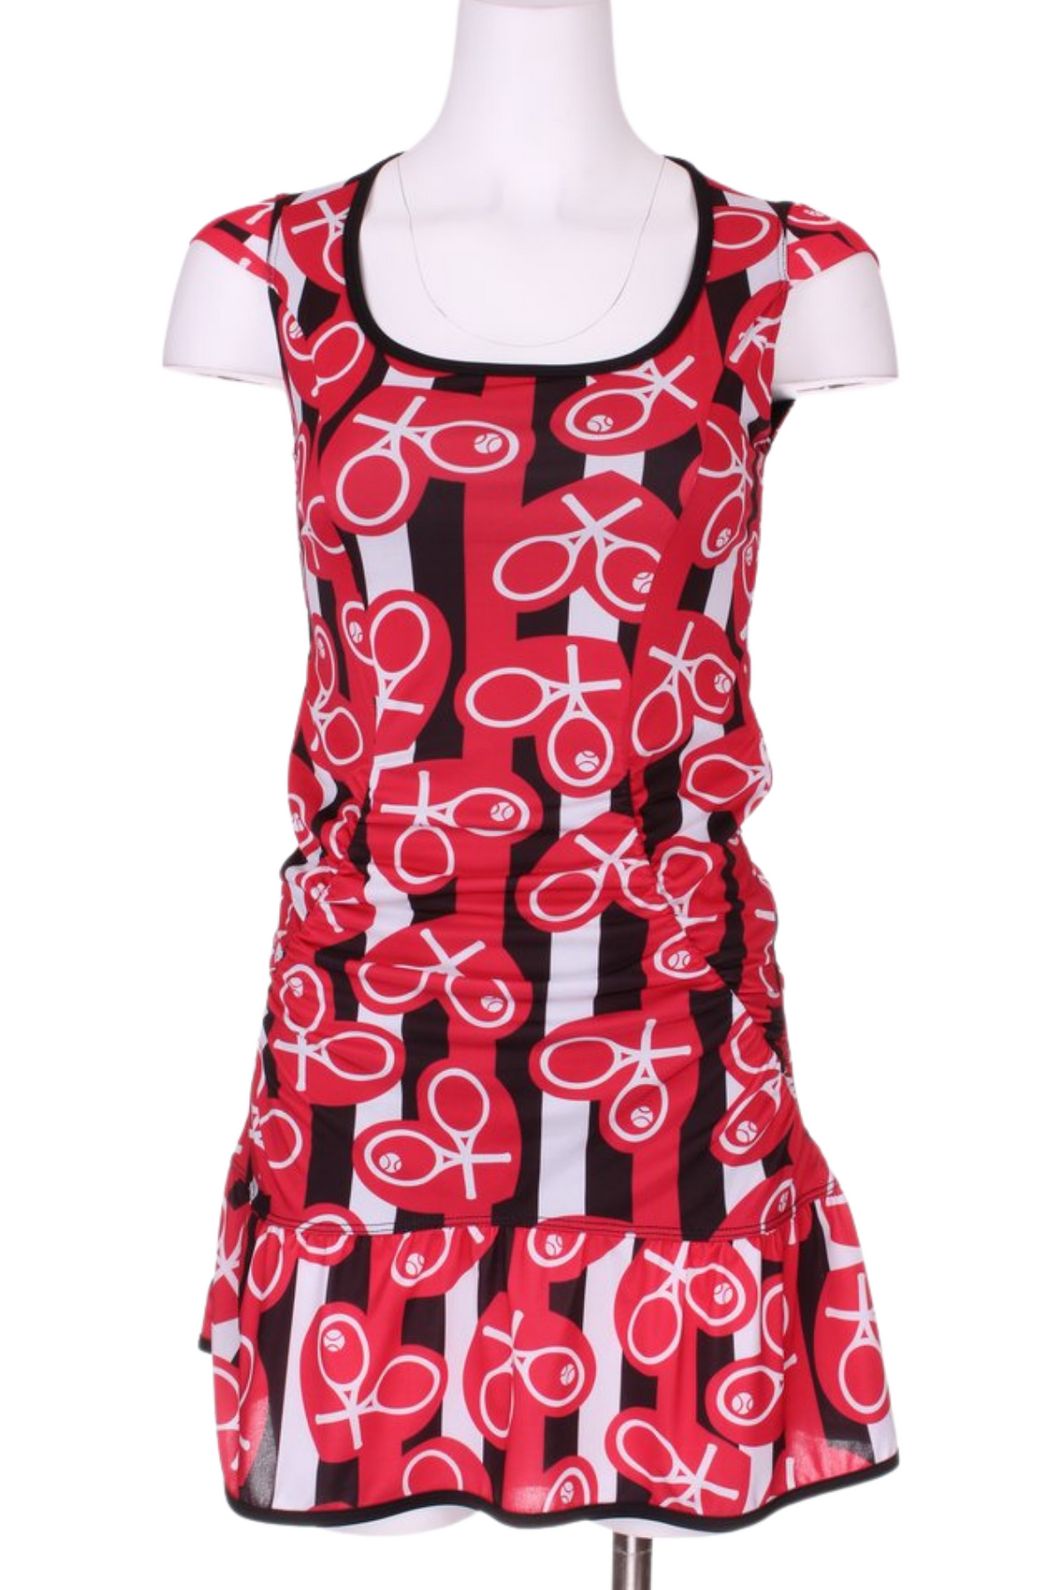 Red Hearts on Black + White Stripes Monroe Tennis Dress - I LOVE MY DOUBLES PARTNER!!!